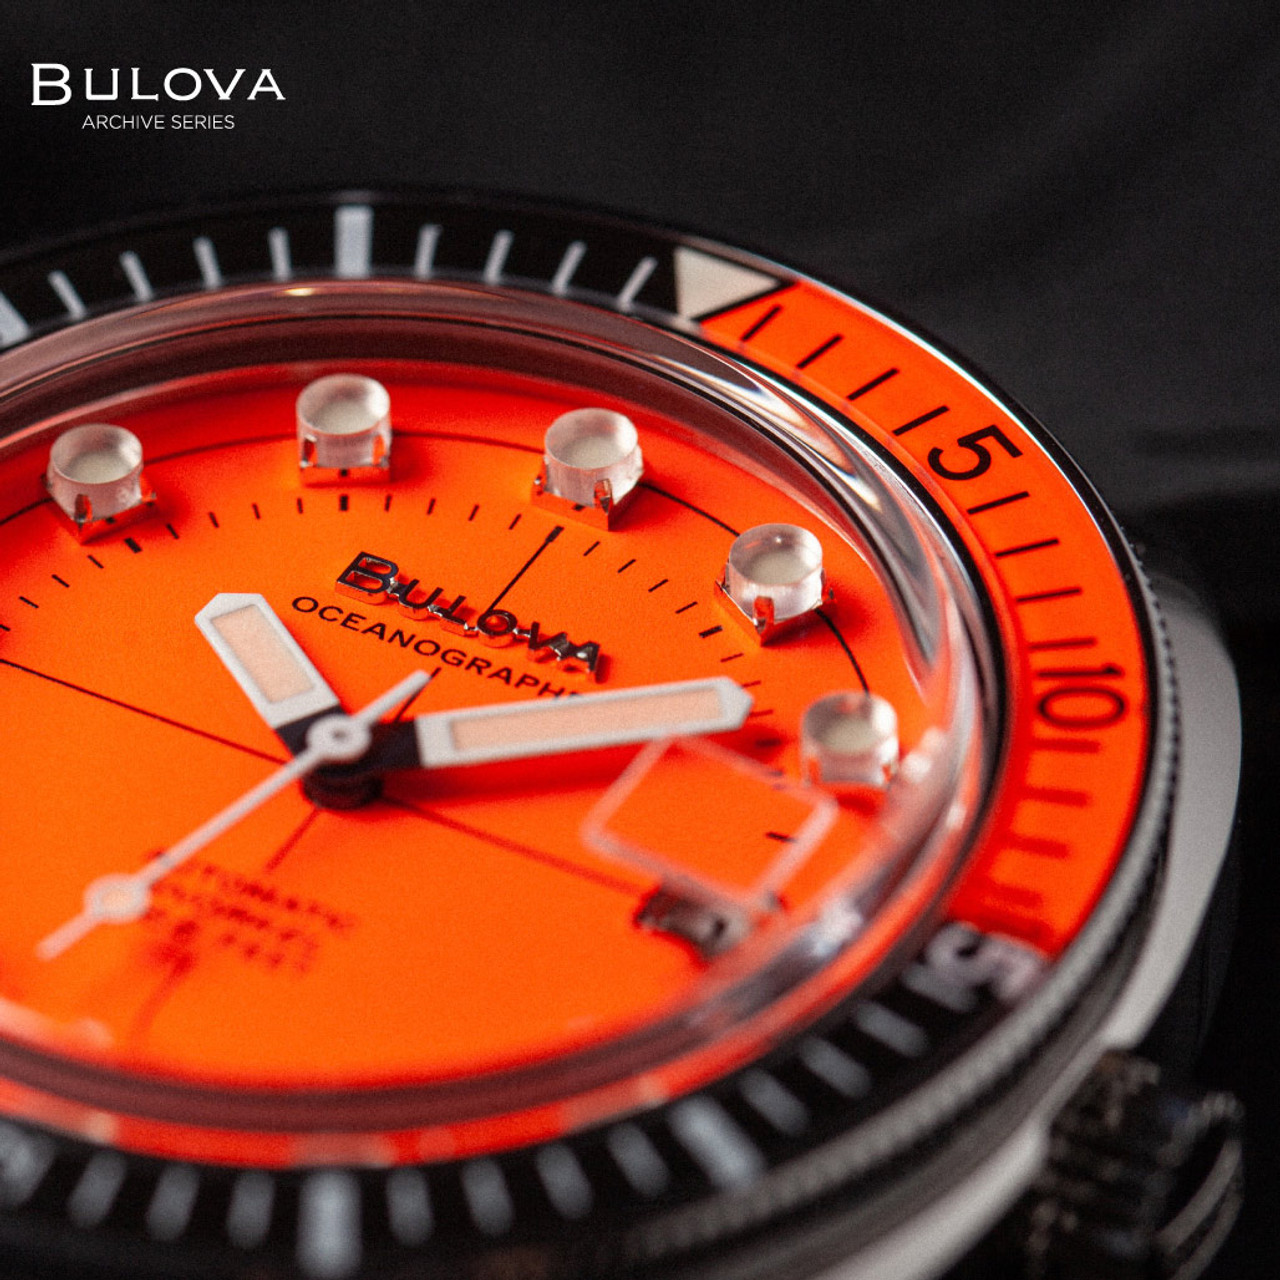 Bulova Oceanographer Snorkel Automatic Dive with Orange #96B350 Dial Watch